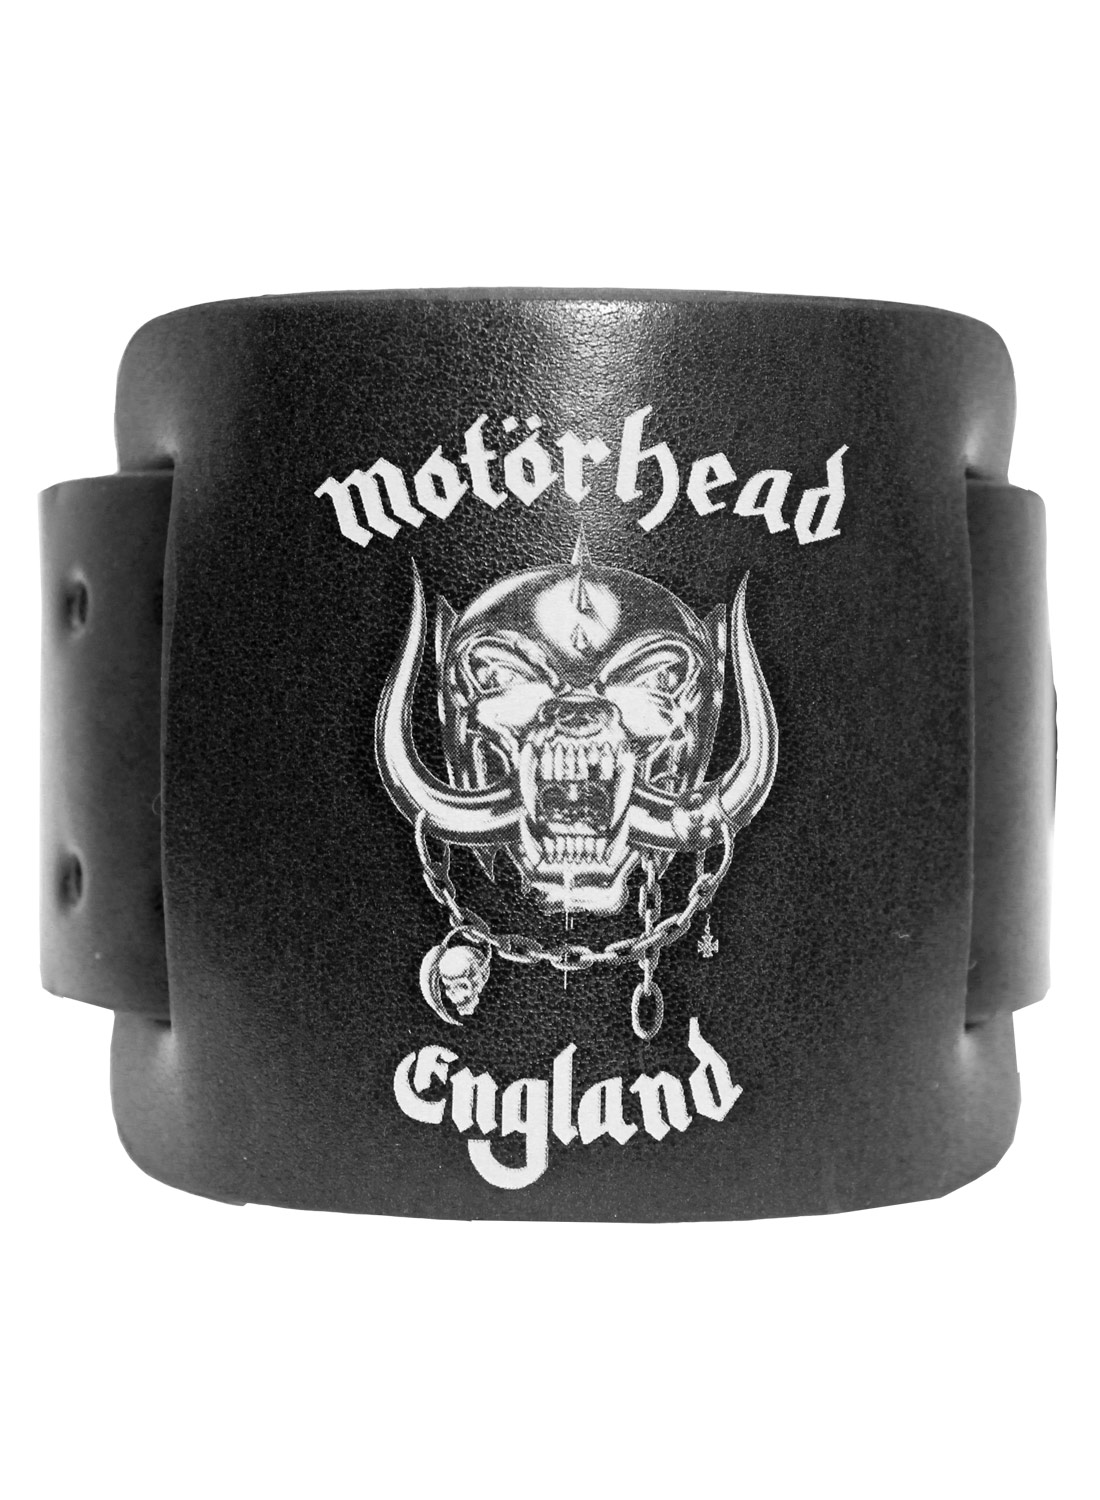 Motörhead Leather Wristband